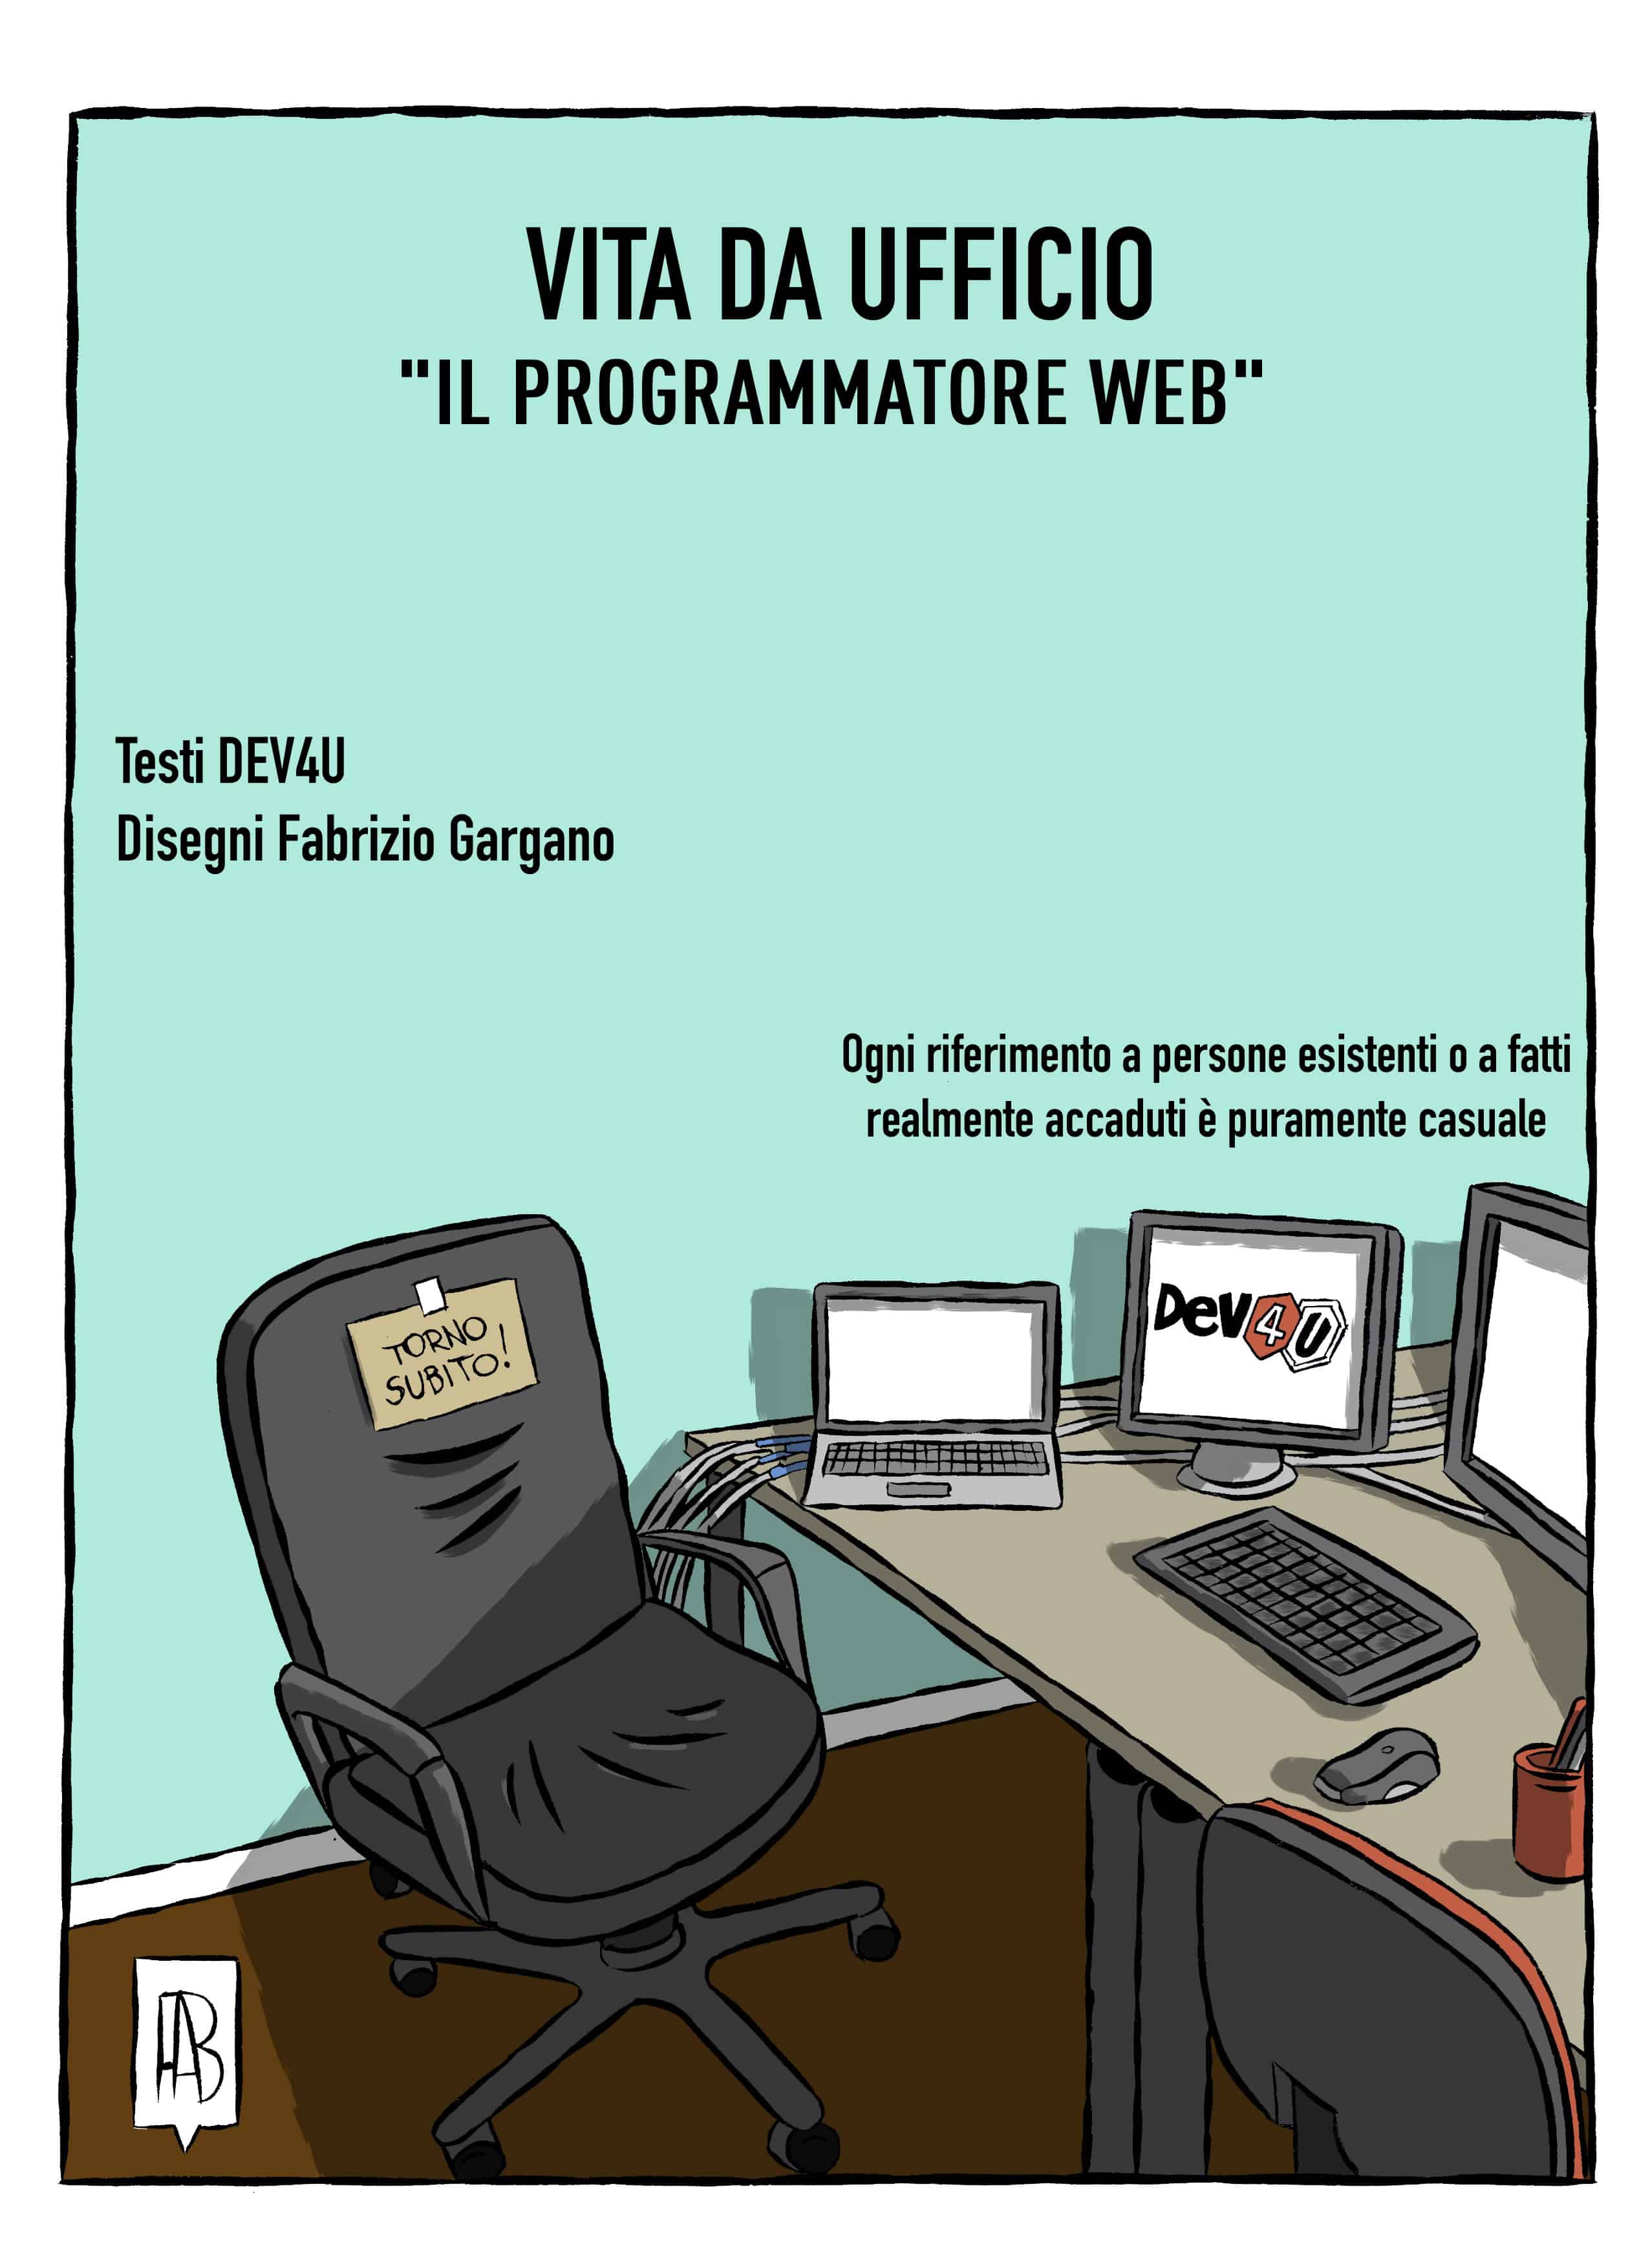 #dev4u #vitadaufficio #programmatoreweb #webdev